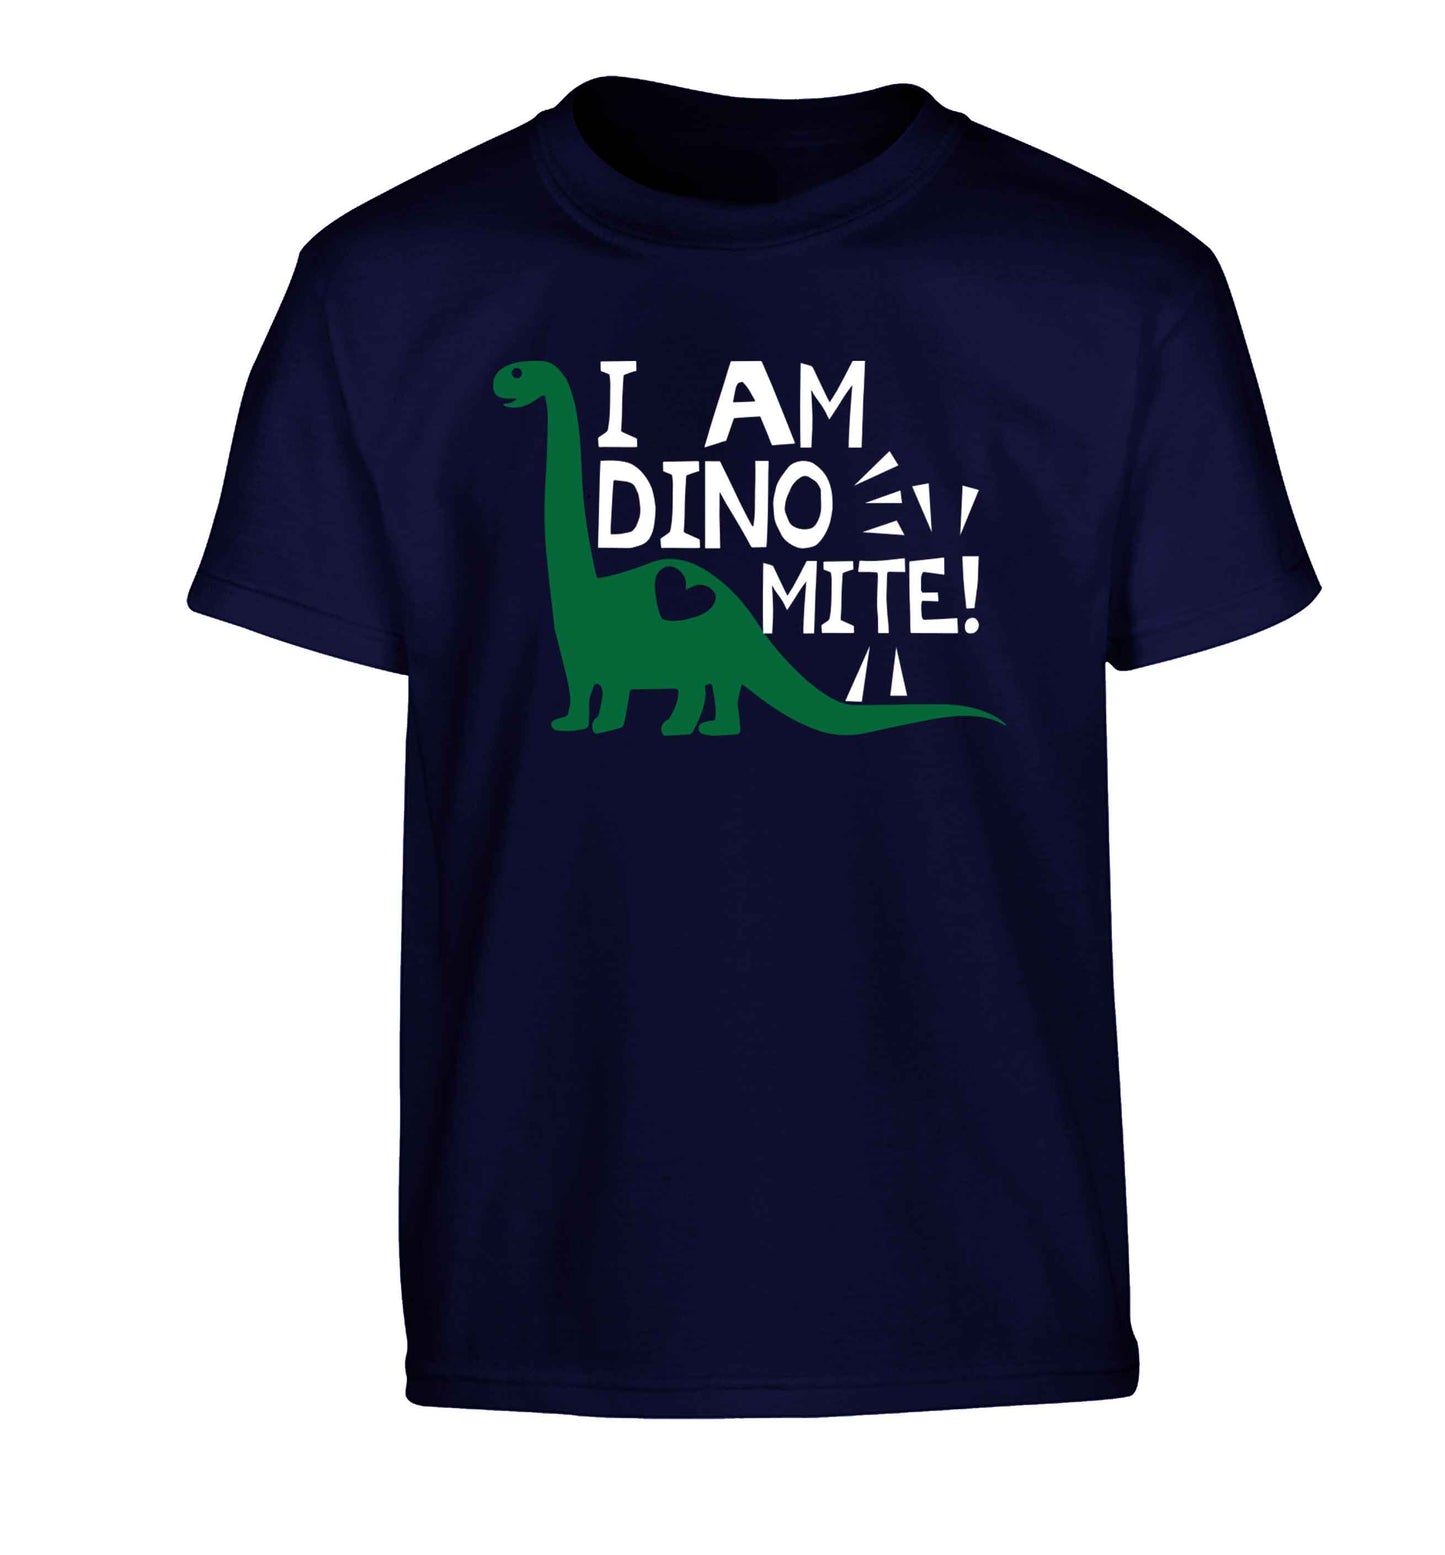 I am dinomite! Children's navy Tshirt 12-13 Years